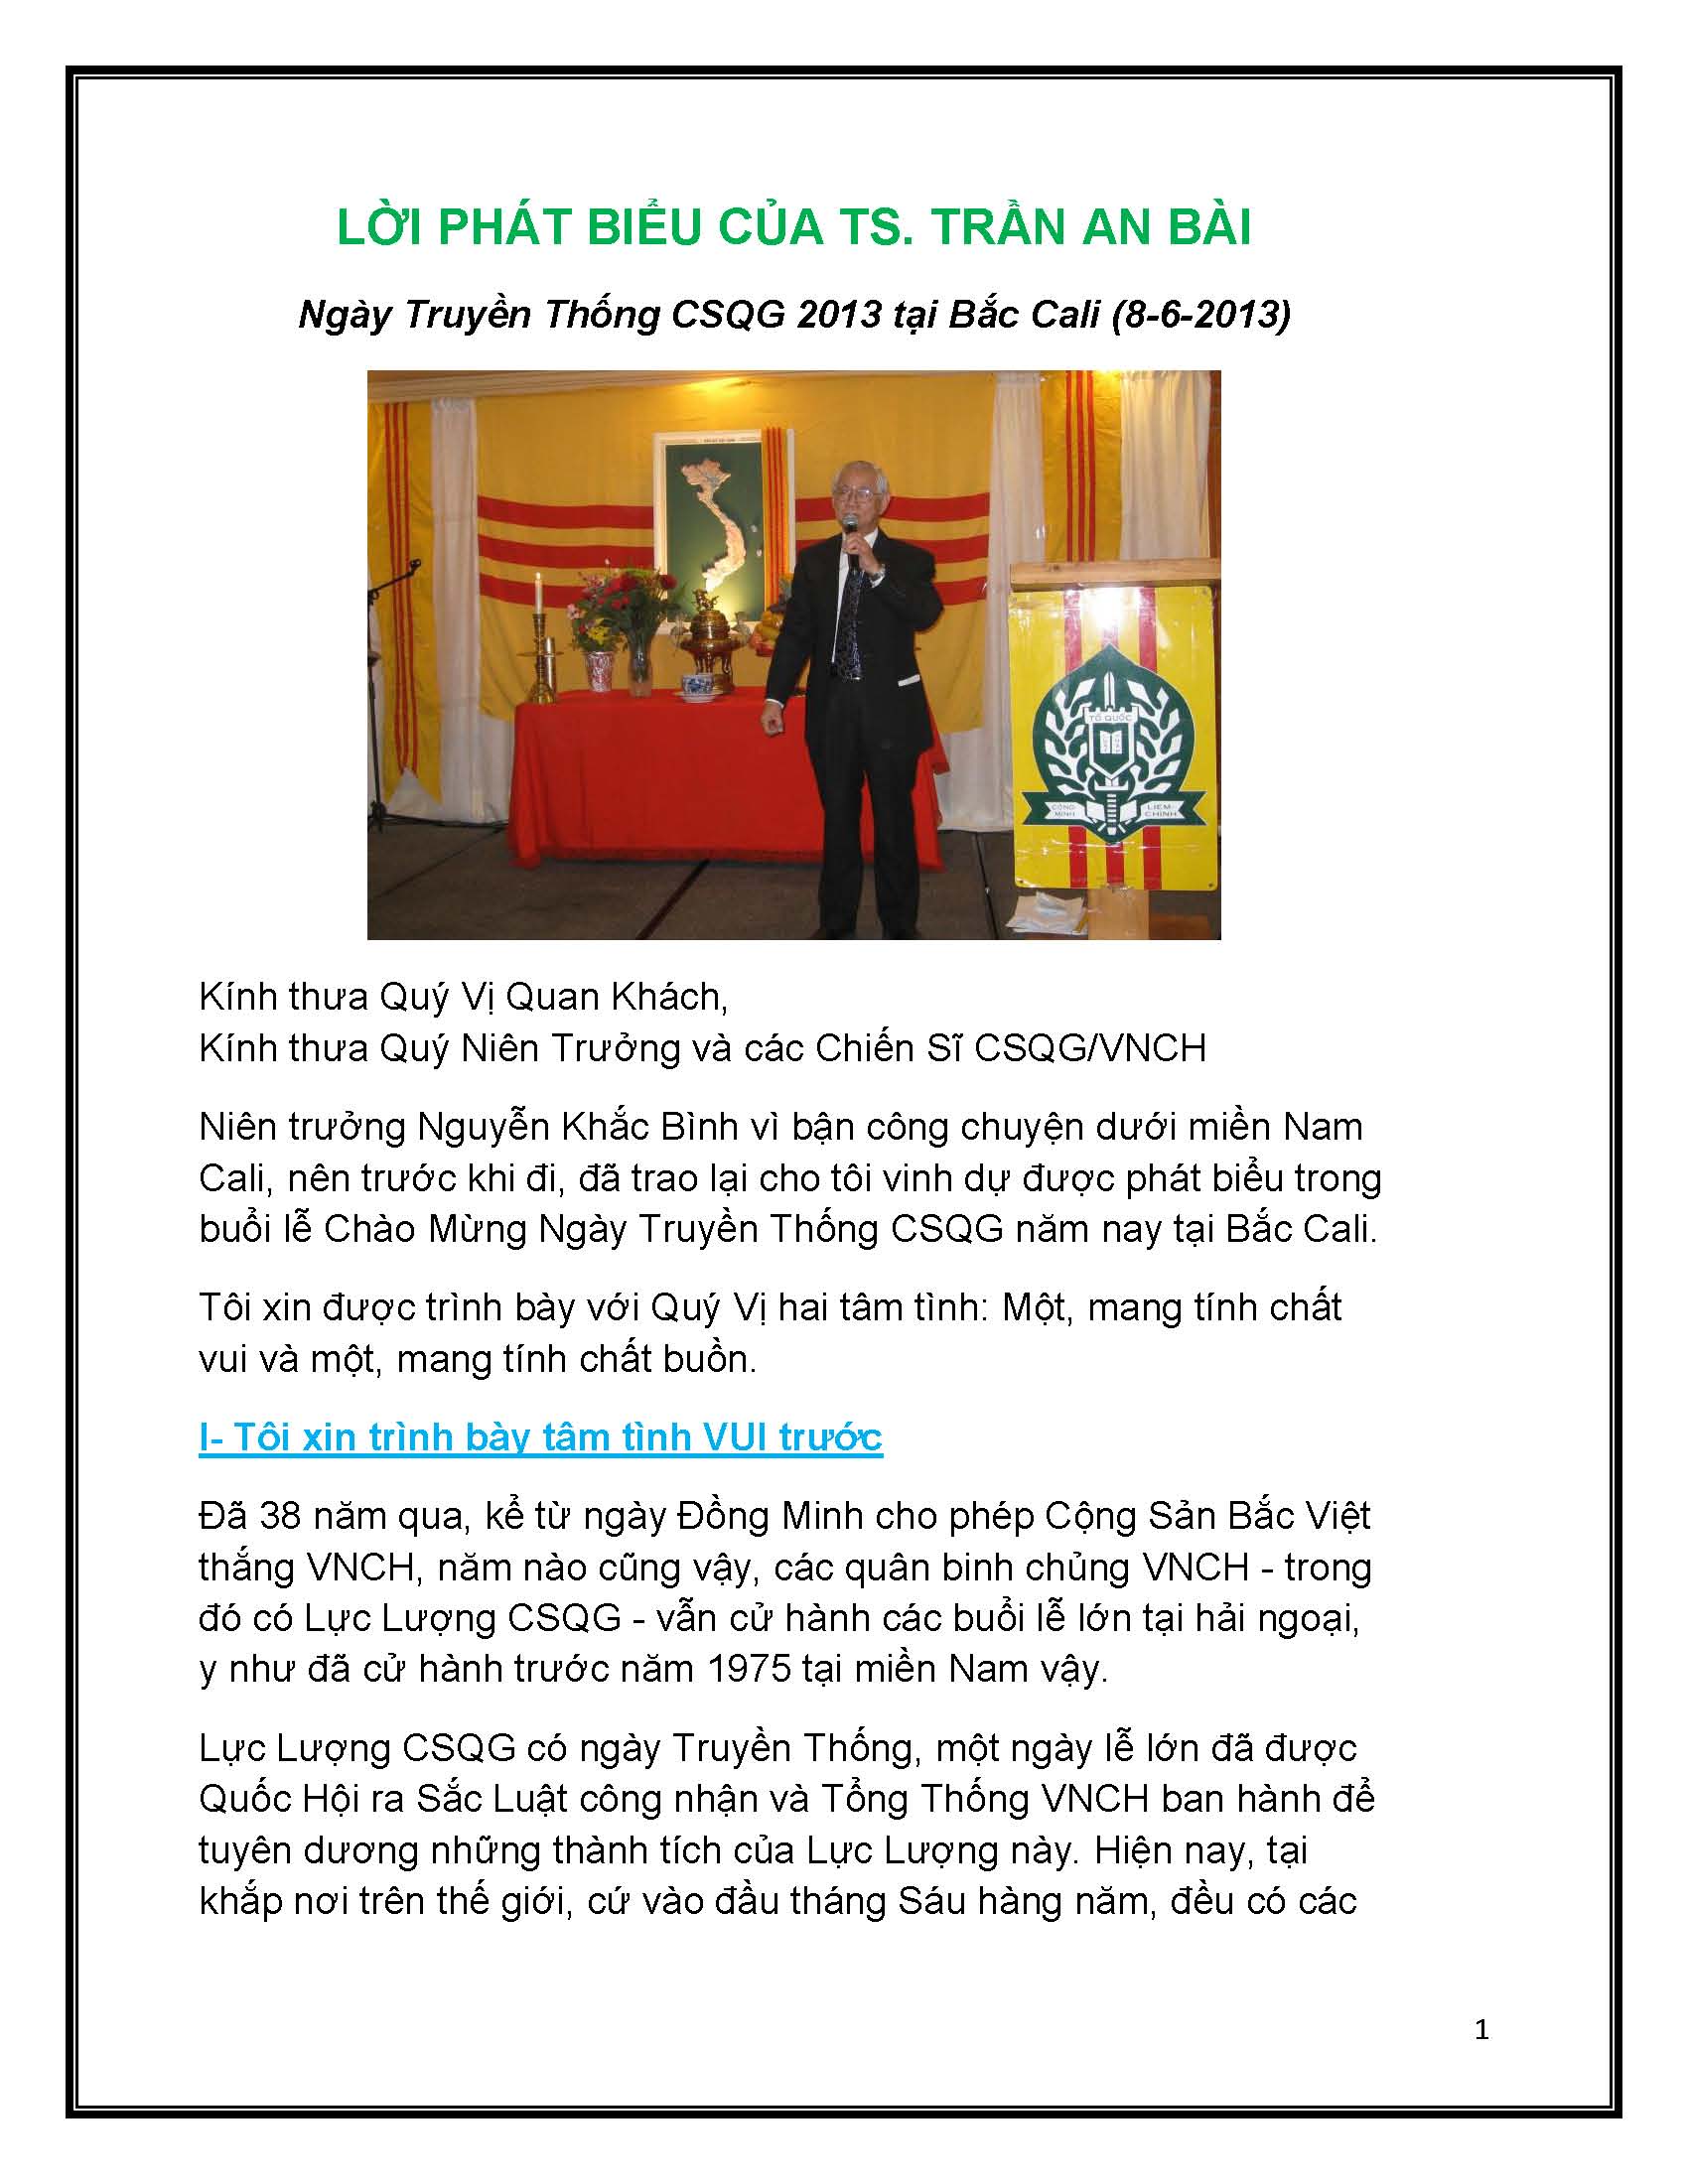 Ngay Truyen Thong CSQG 2013 Page 1